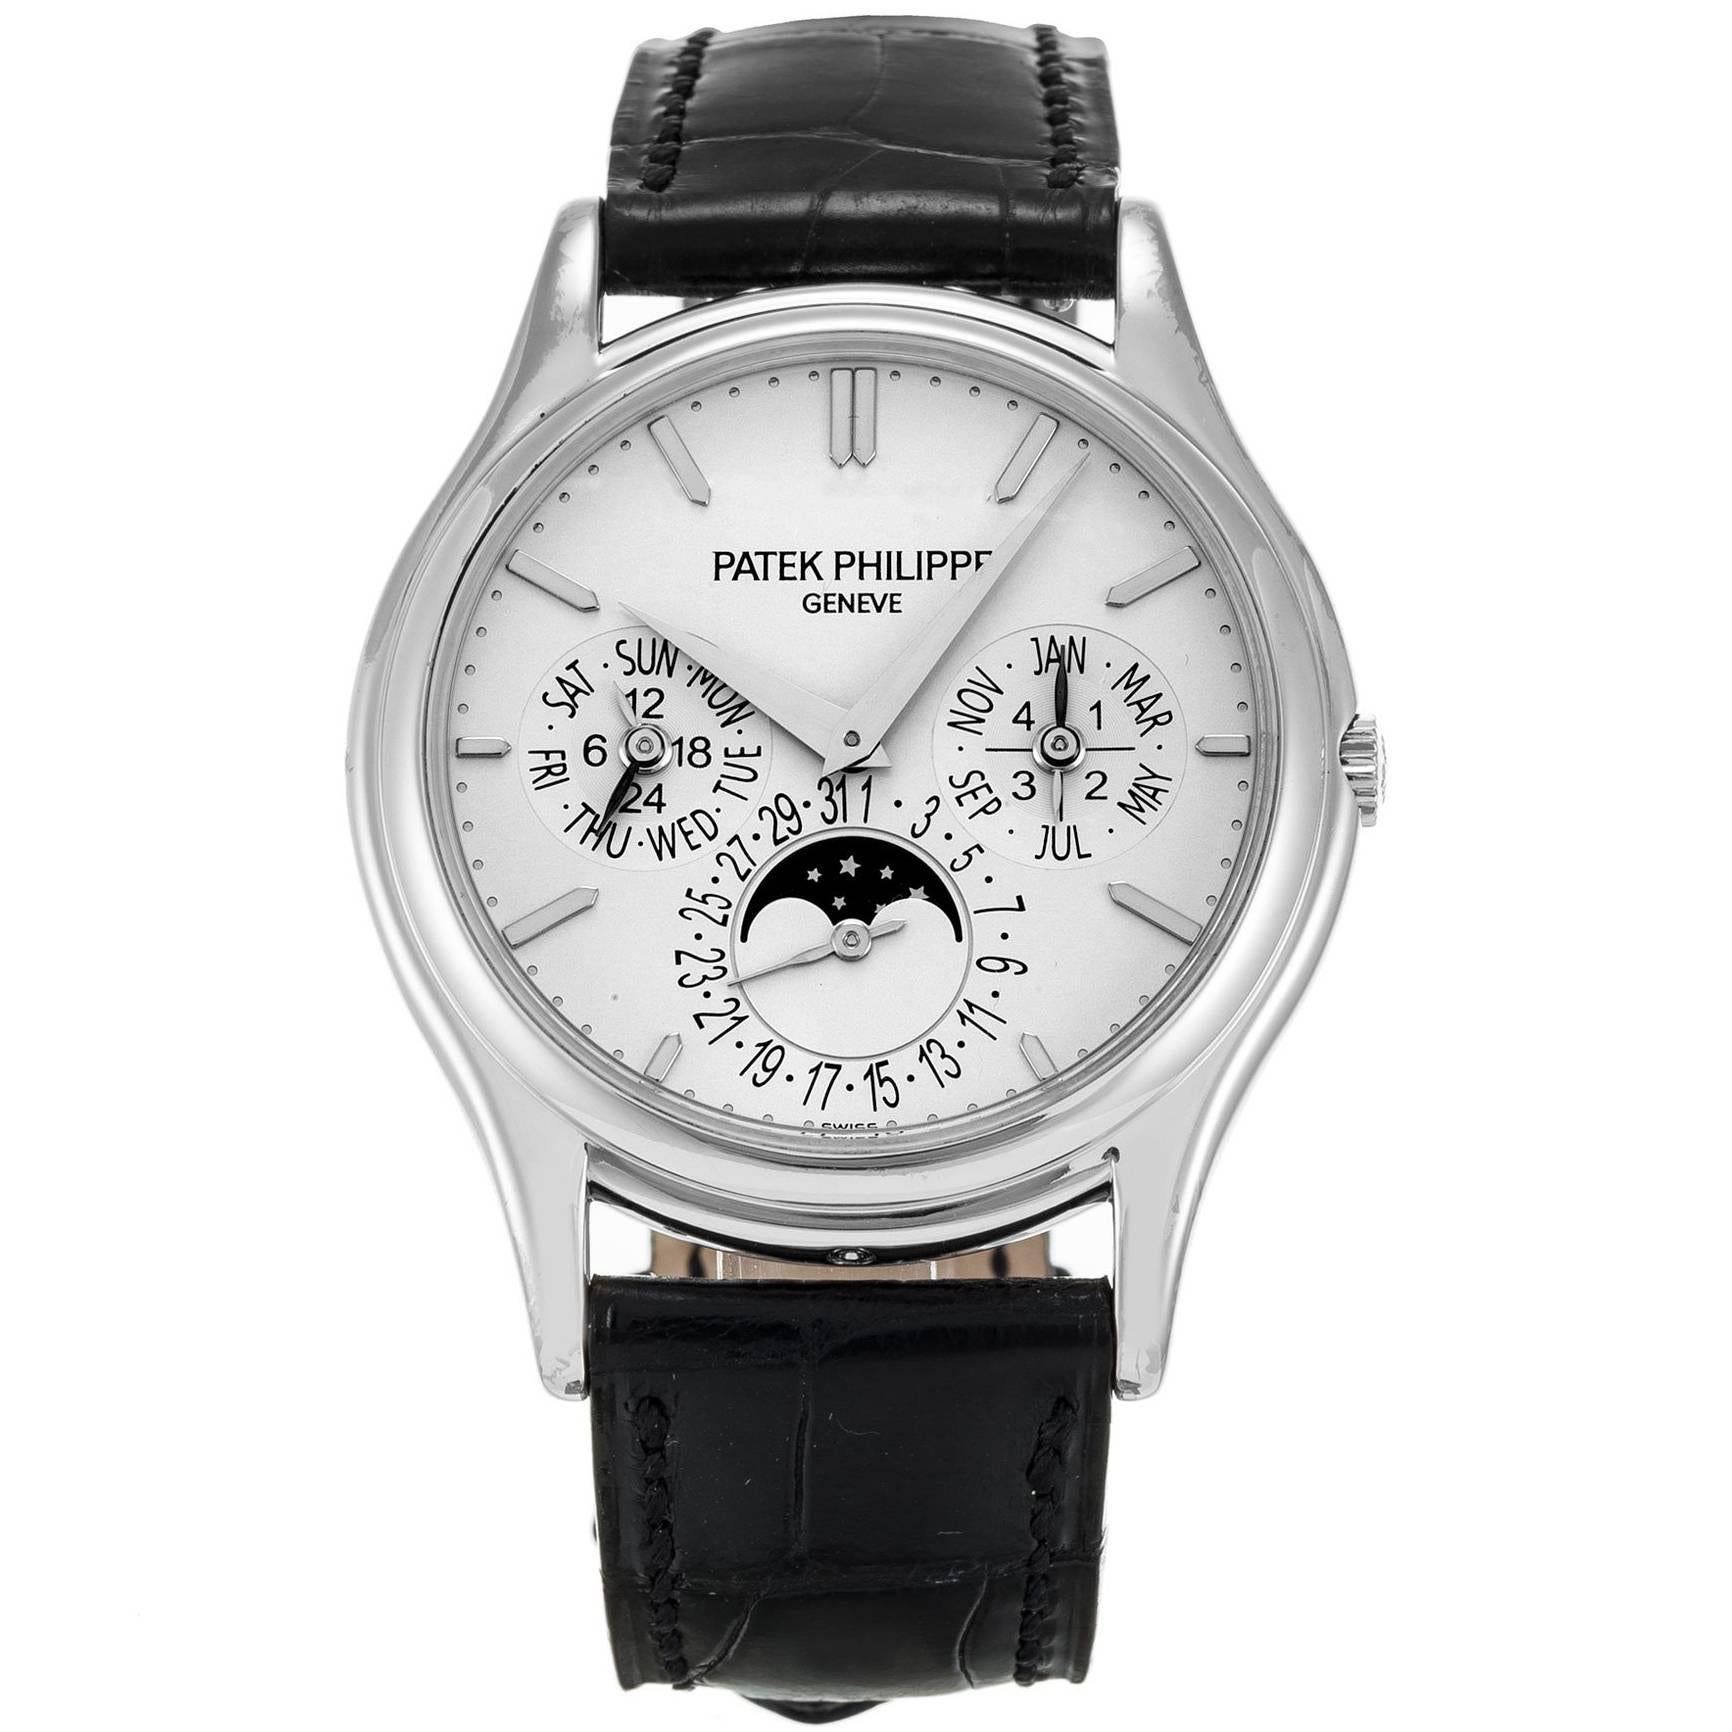 Patek Philippe White gold Perpetual Calendar Automatic Wristwatch Ref 5140 G